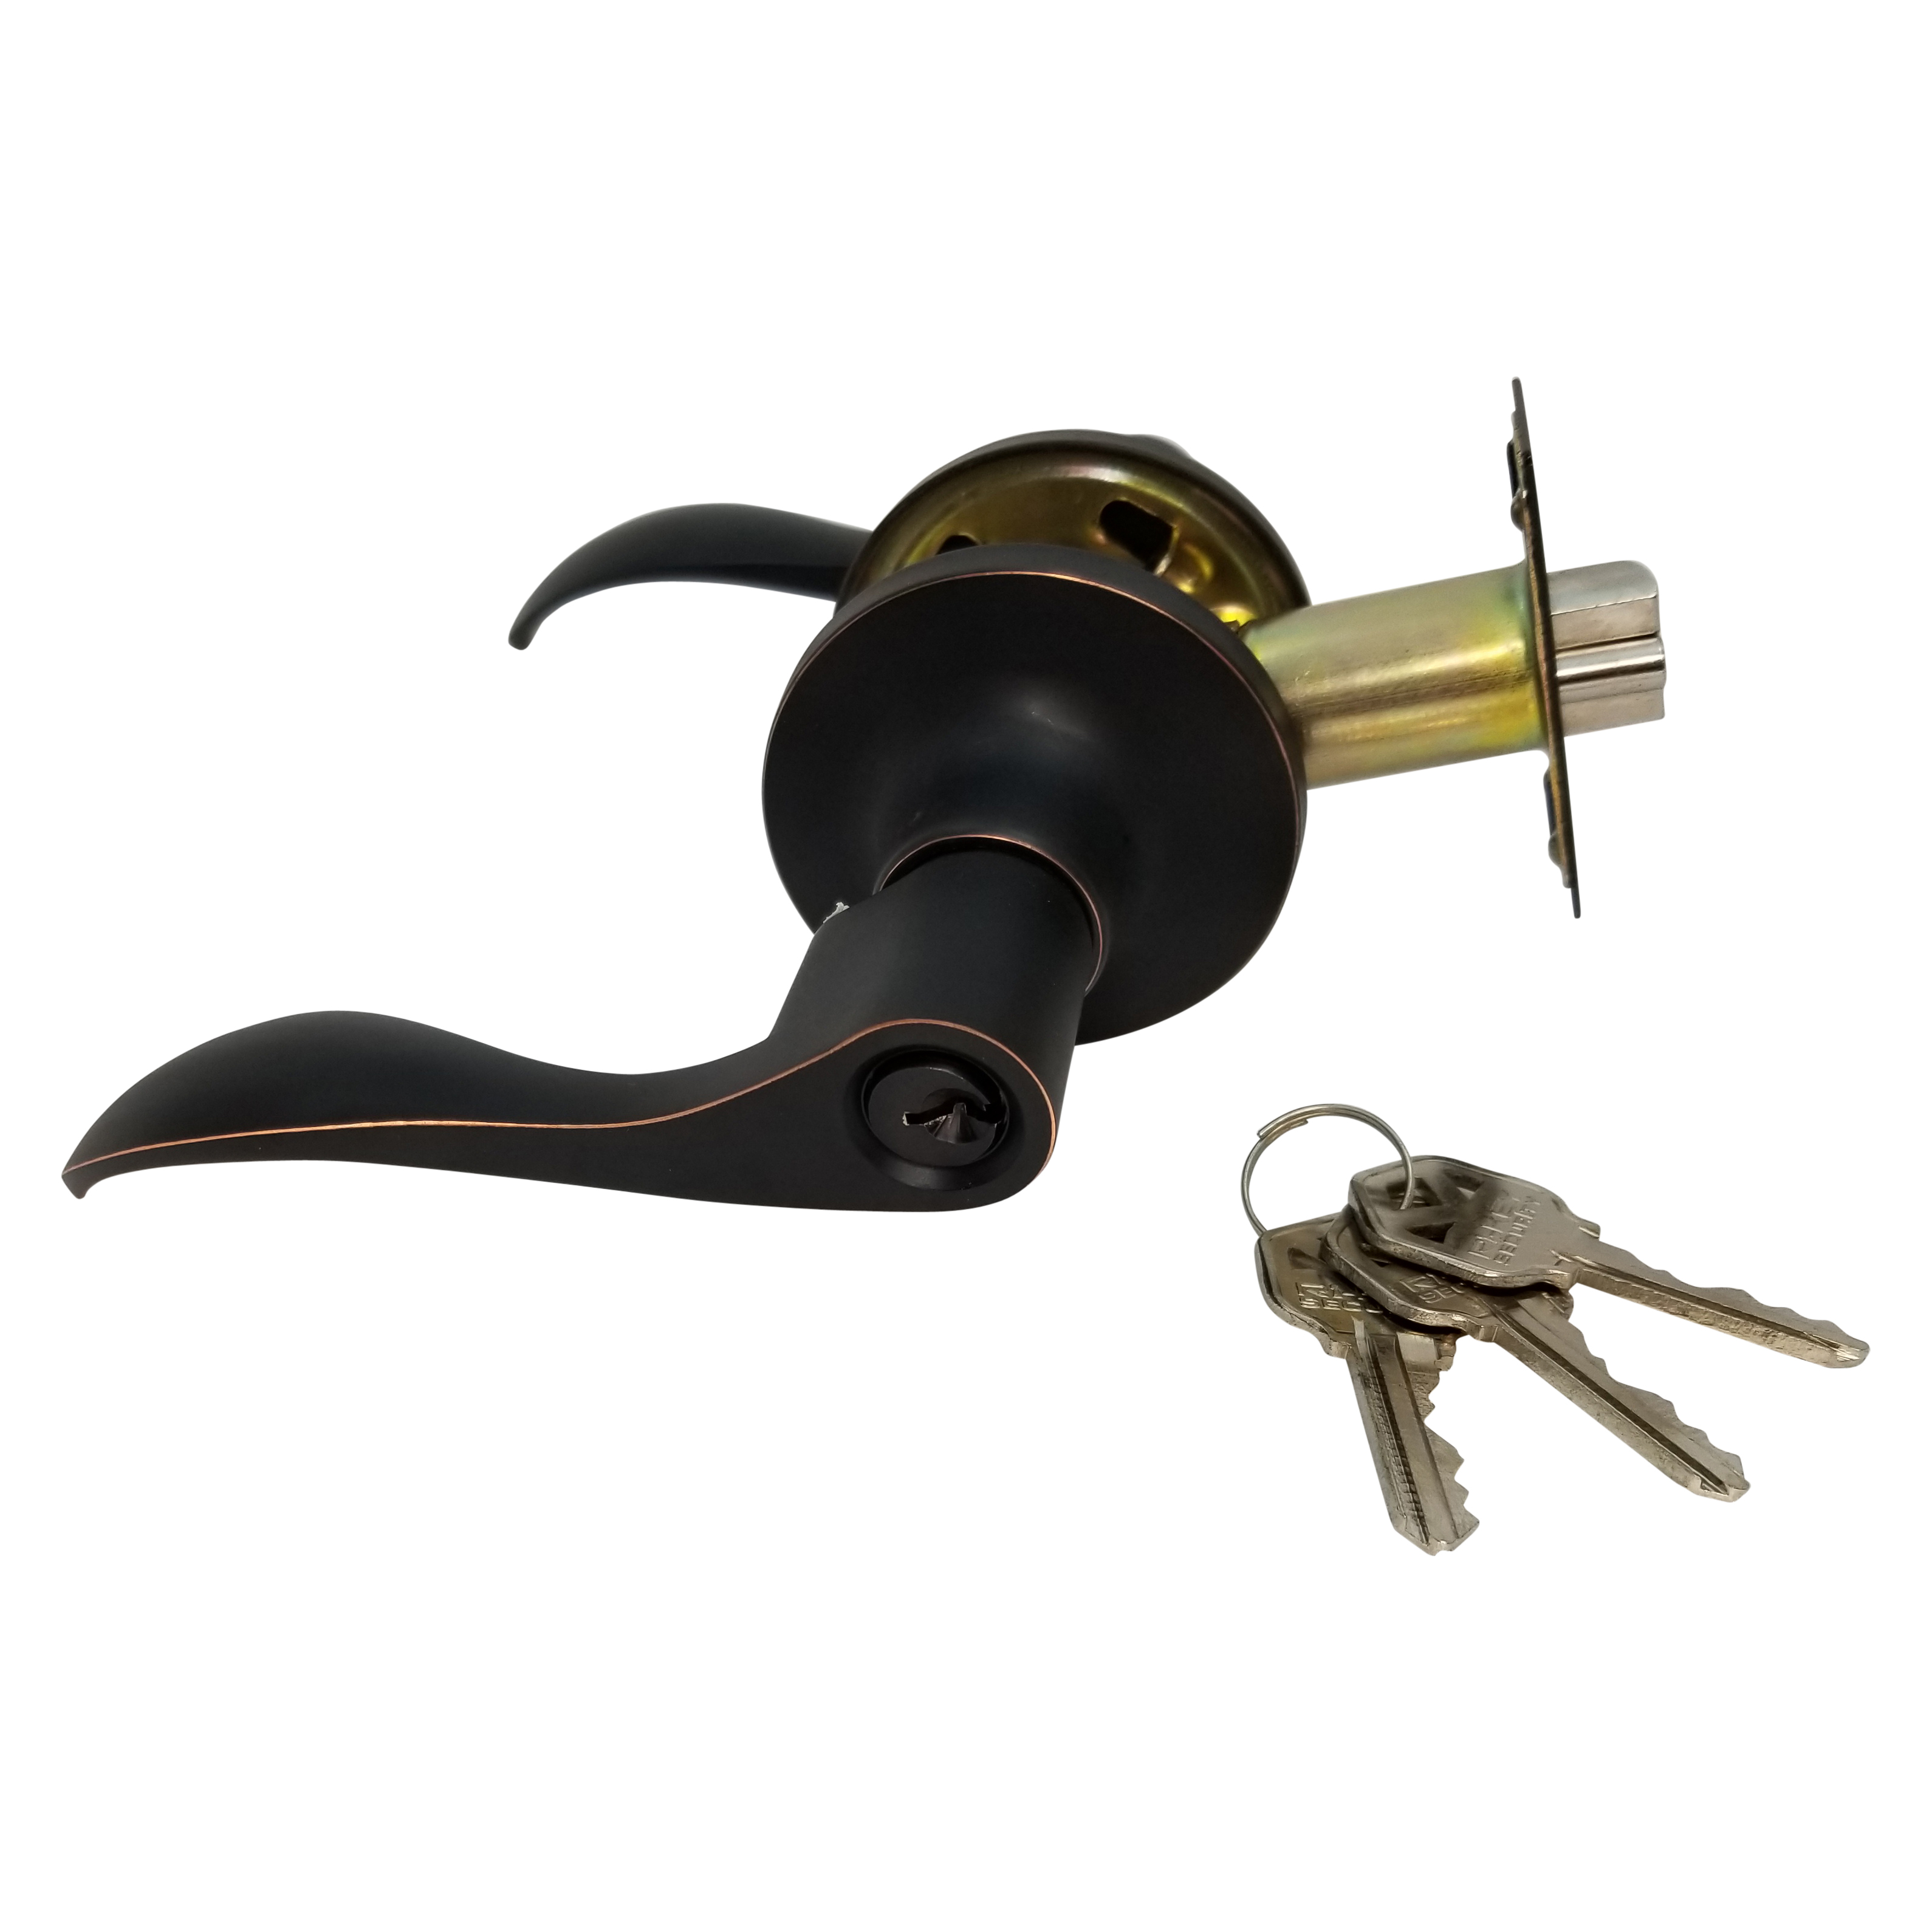 RI-KEY SECURITY Lever Door Lock Entry Keyed Cylinder Wave Handle 3 Keys Oil-Rub Bronze Finish KW RH - image 1 of 10